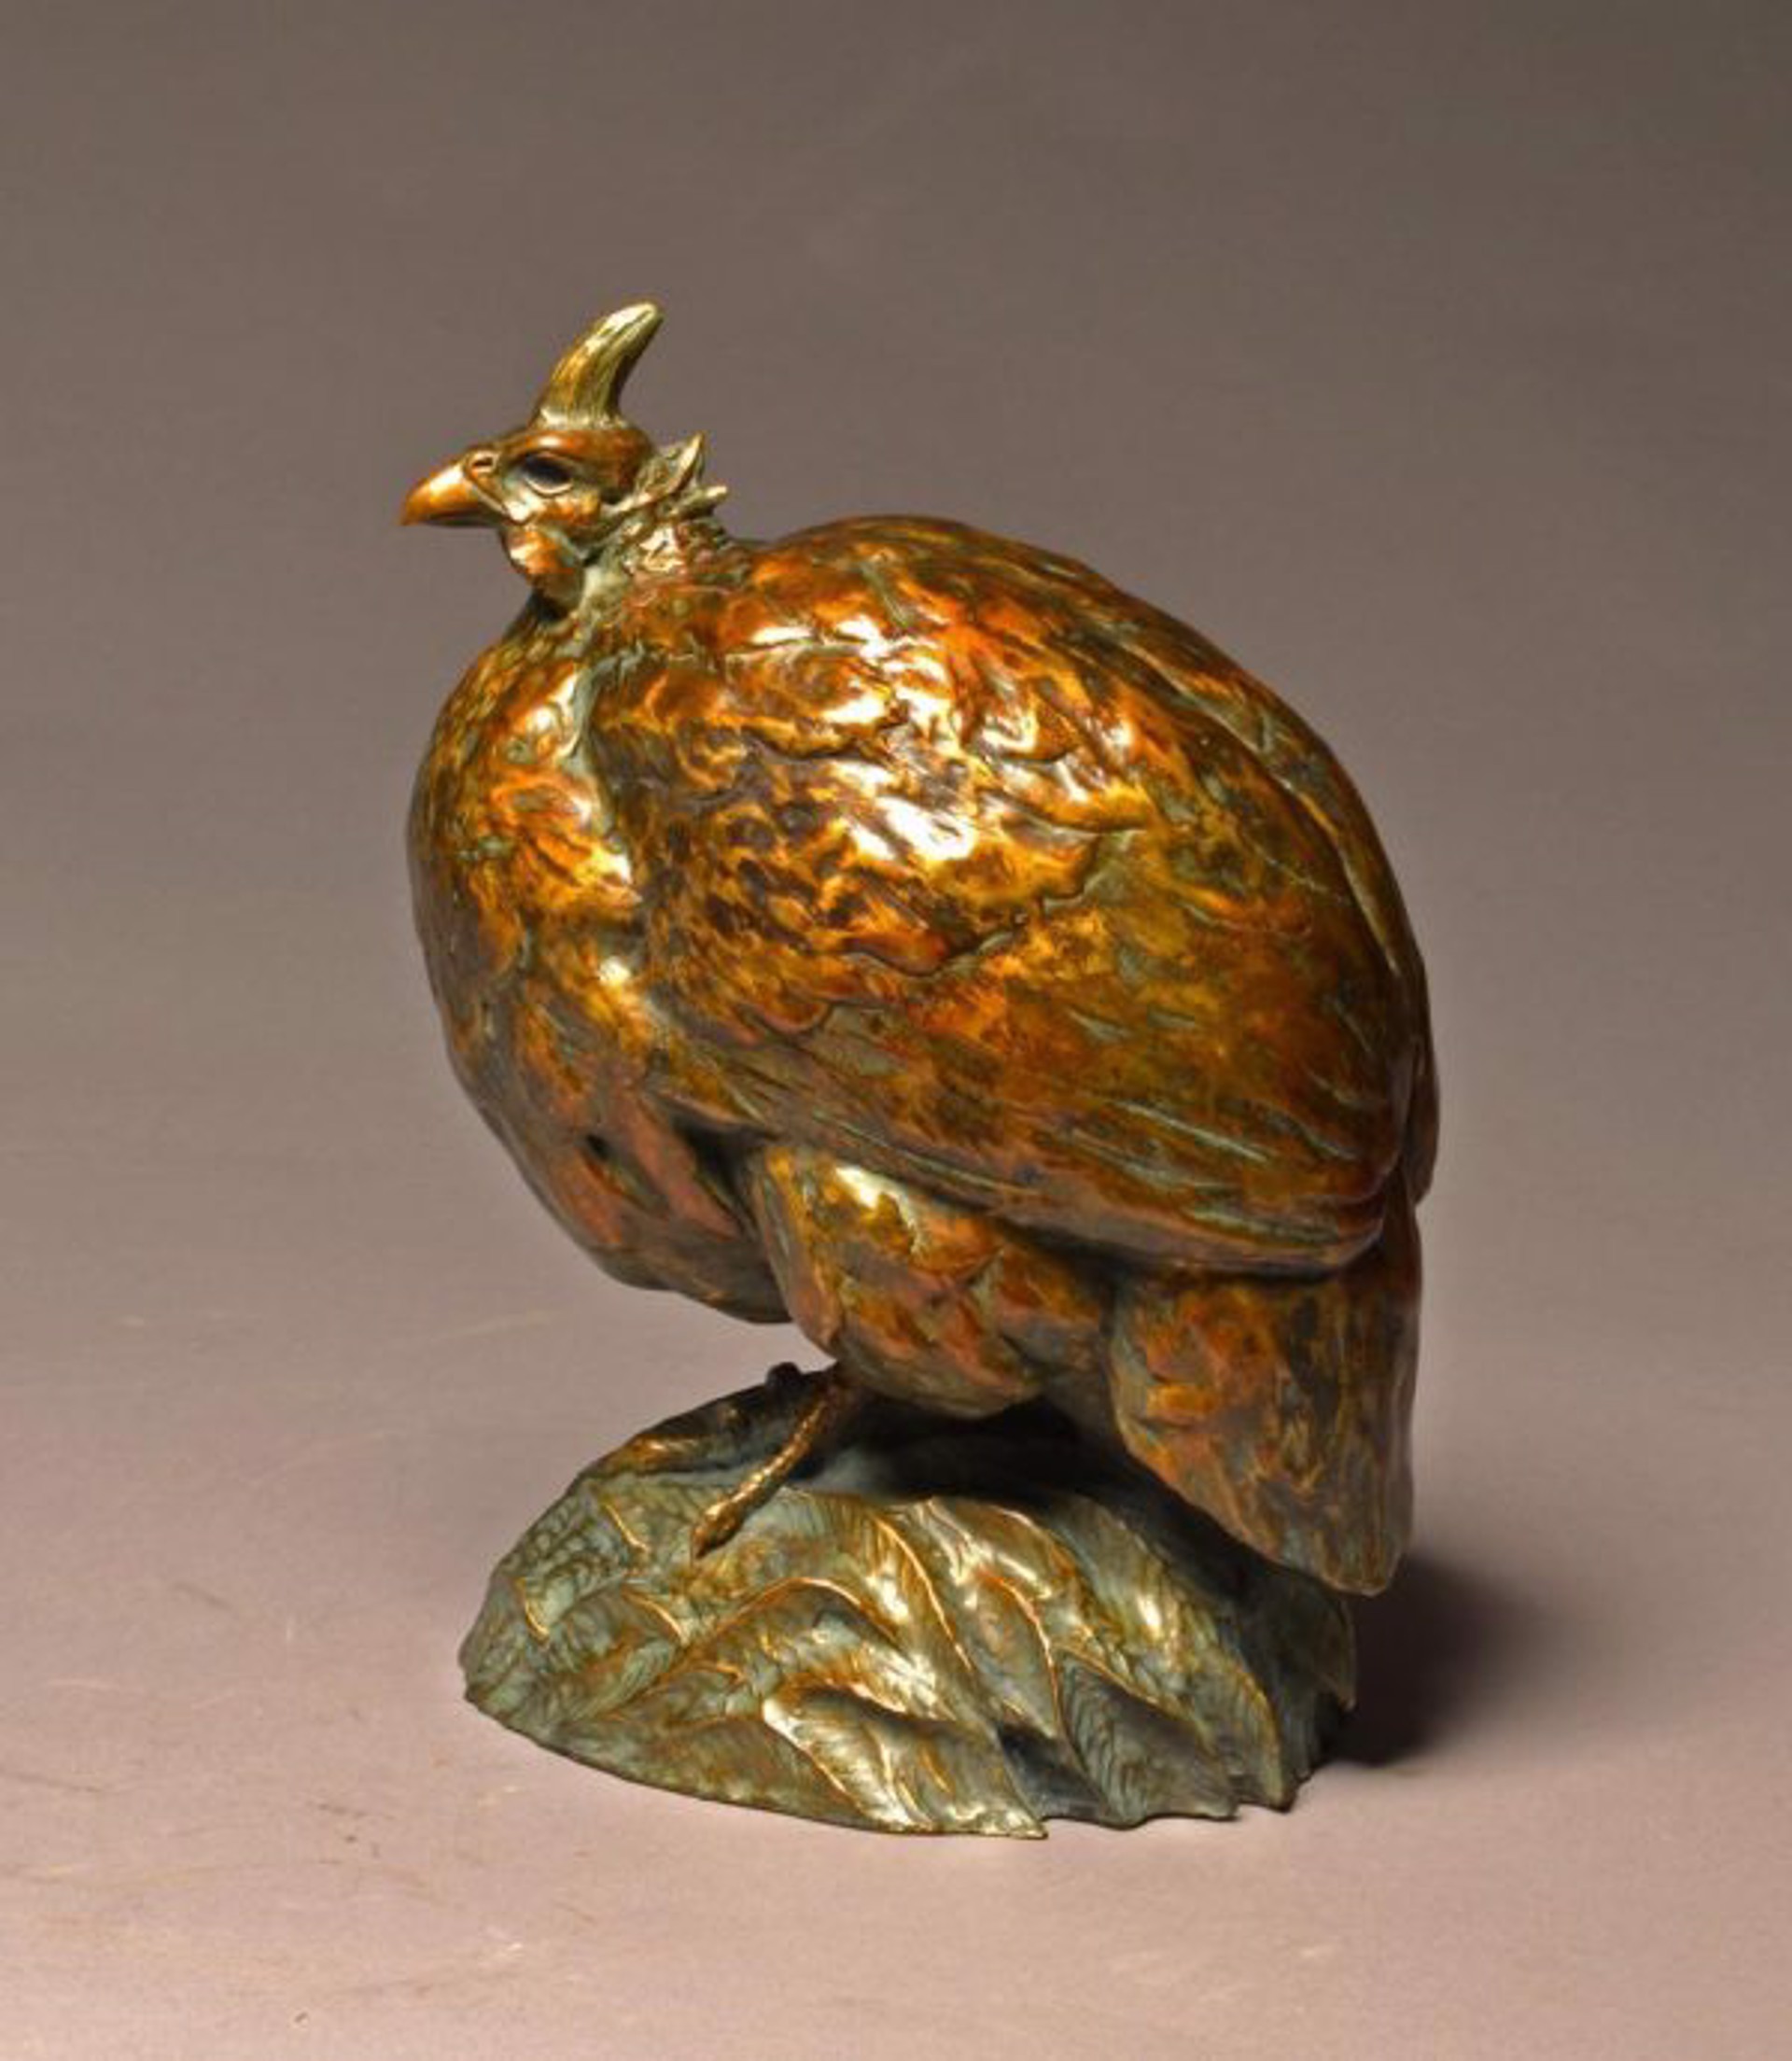 Fowl Ball (Helmeted Guinea Fowl) by Stefan Savides